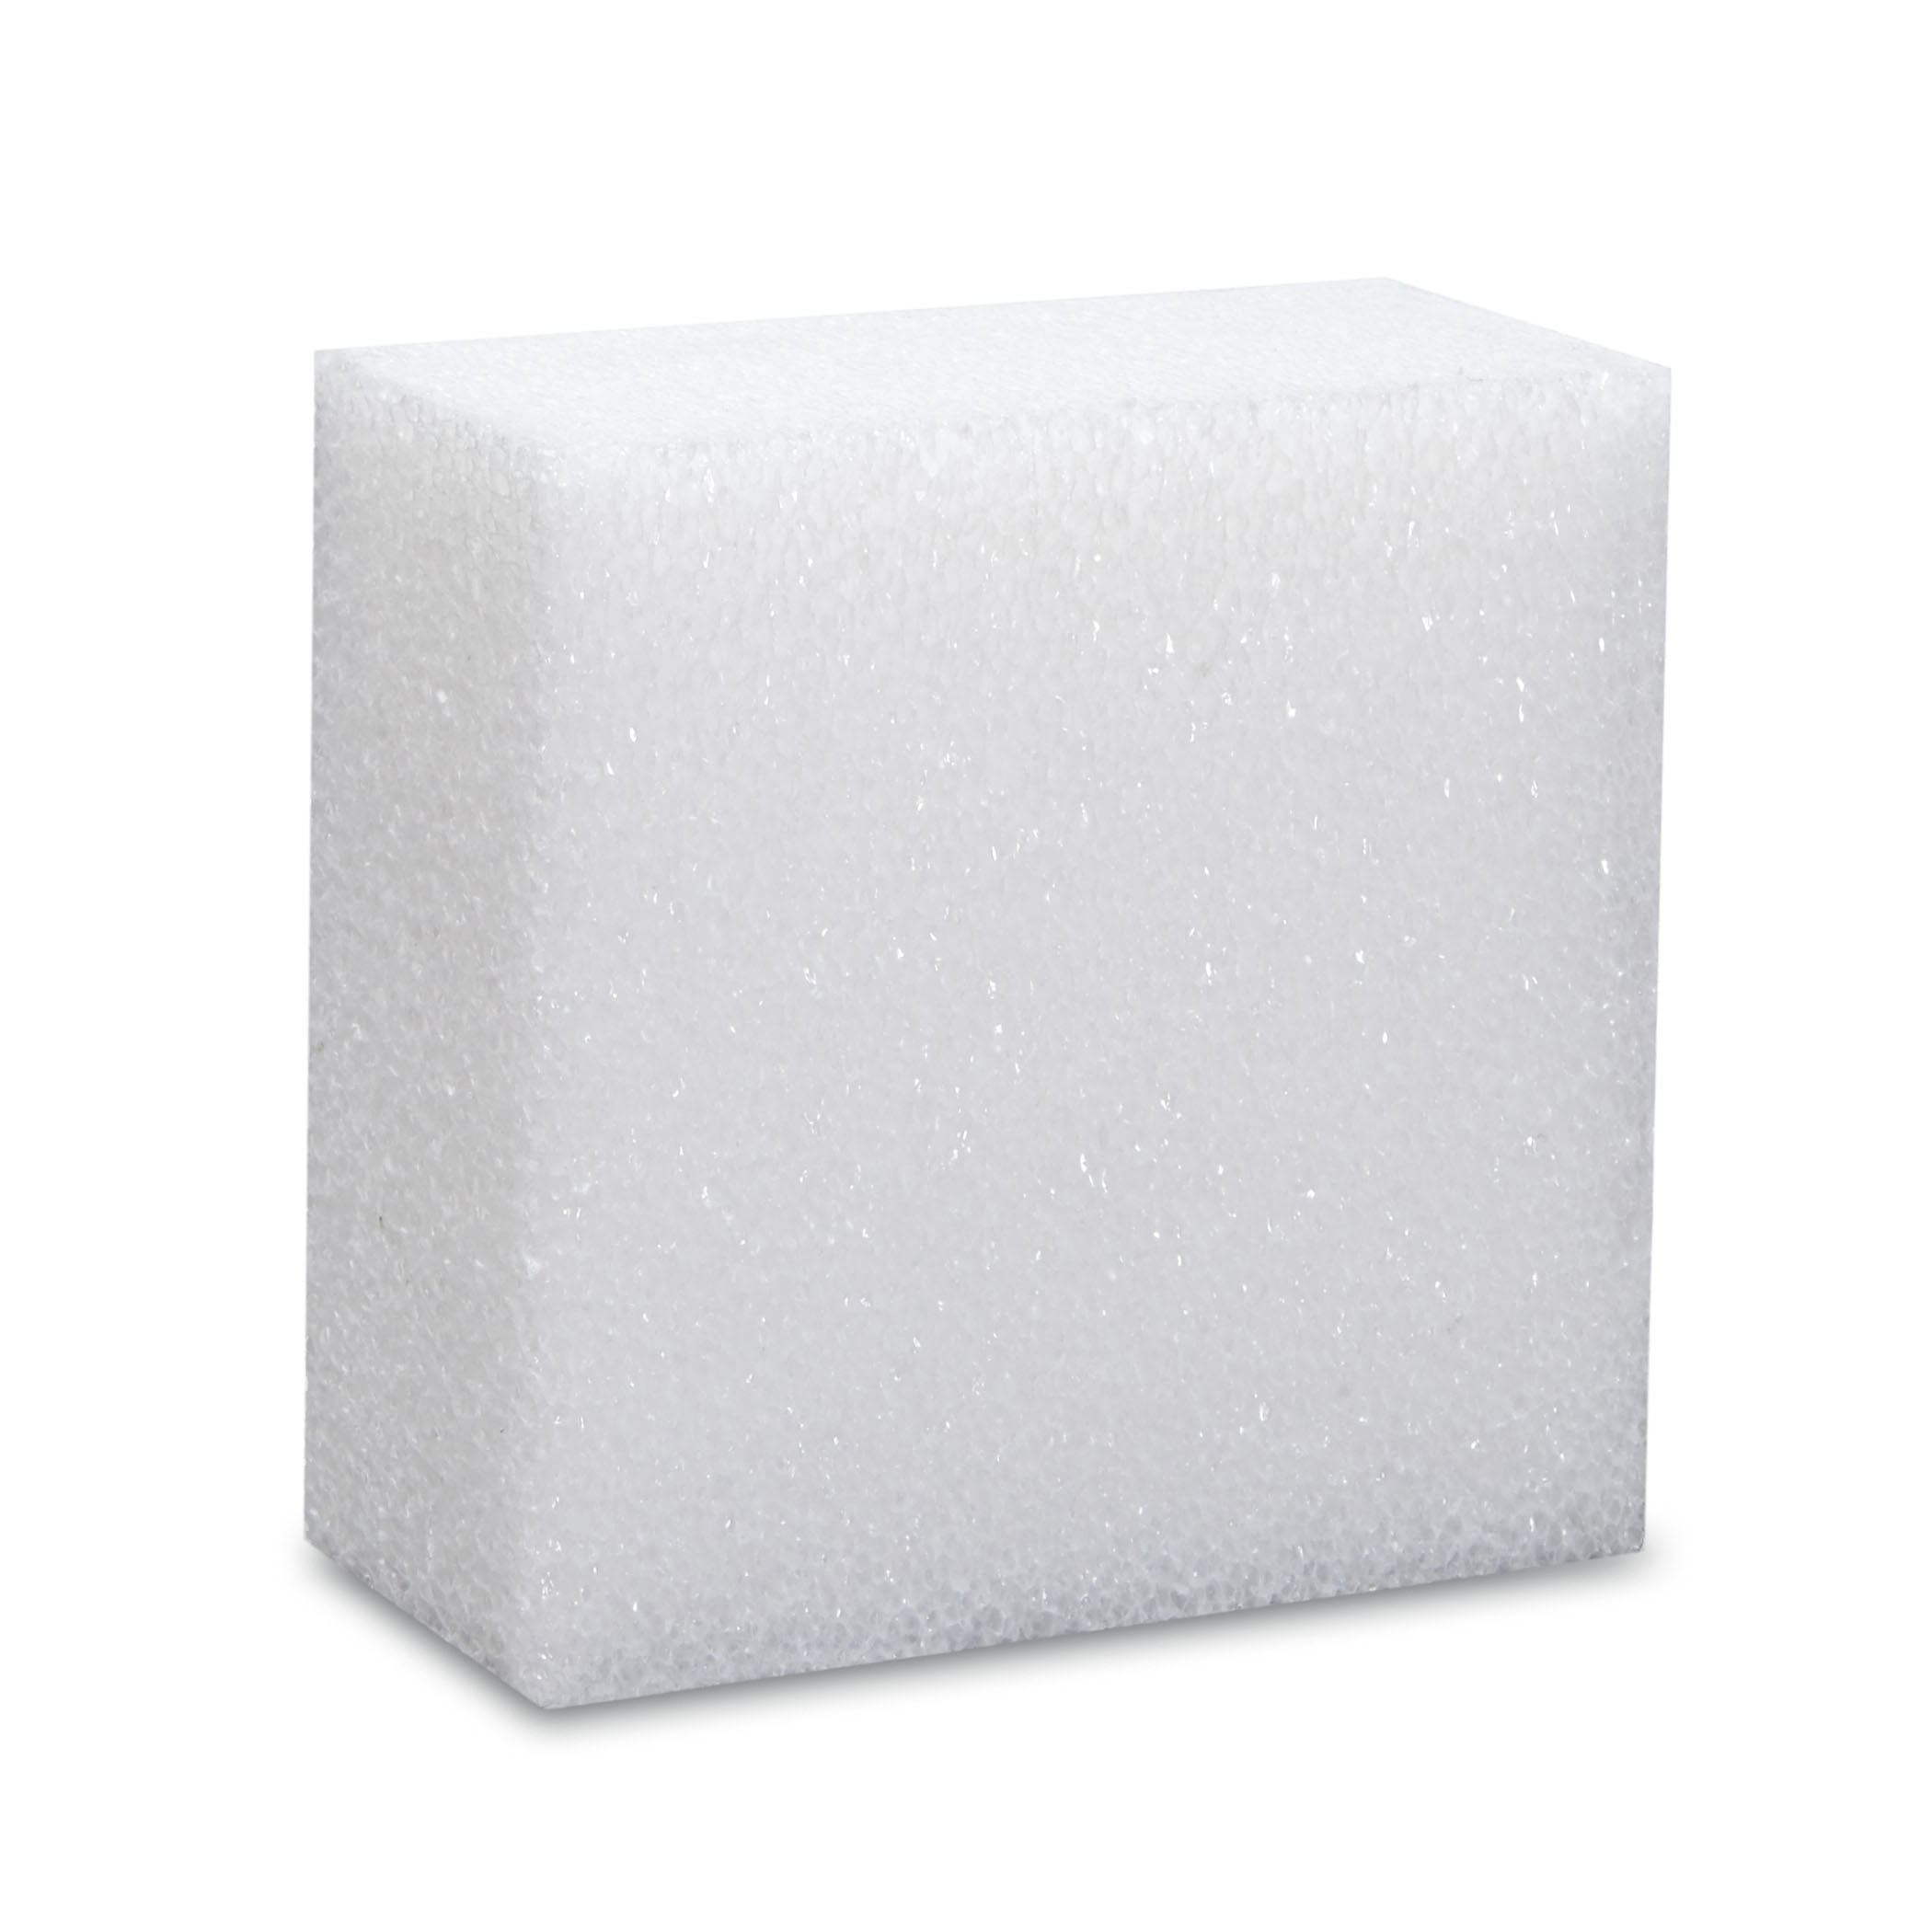 Floracraft Styrofoam Block 2x 4x 4 White